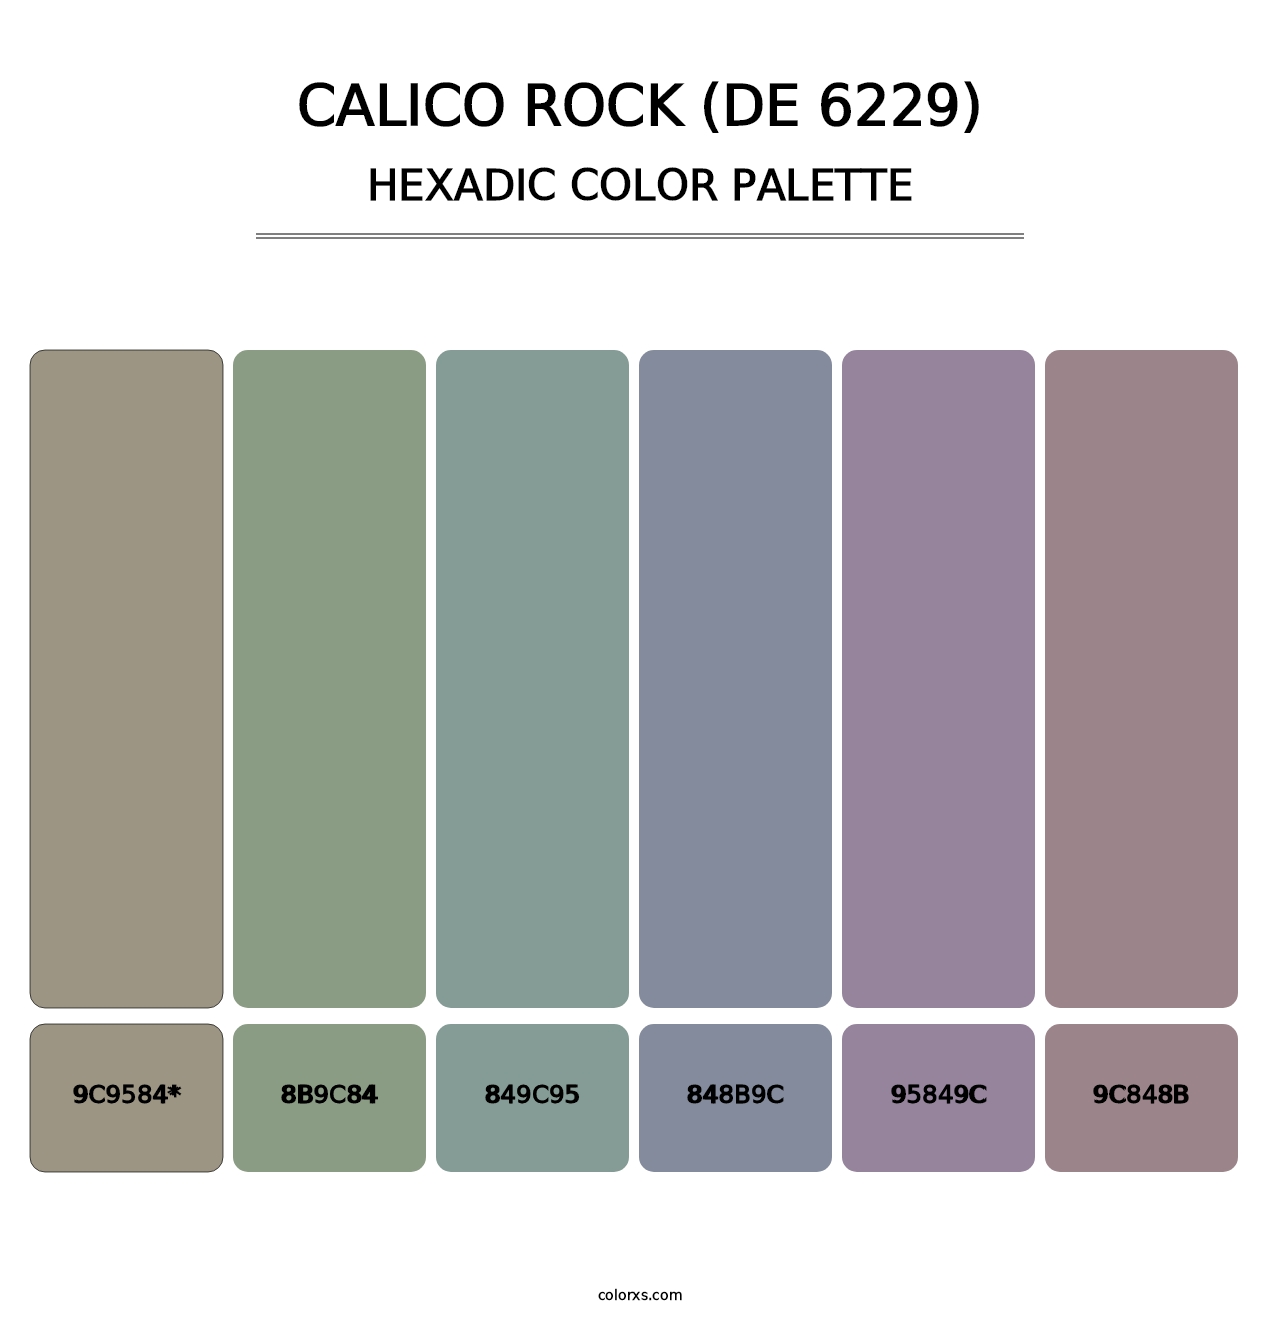 Calico Rock (DE 6229) - Hexadic Color Palette